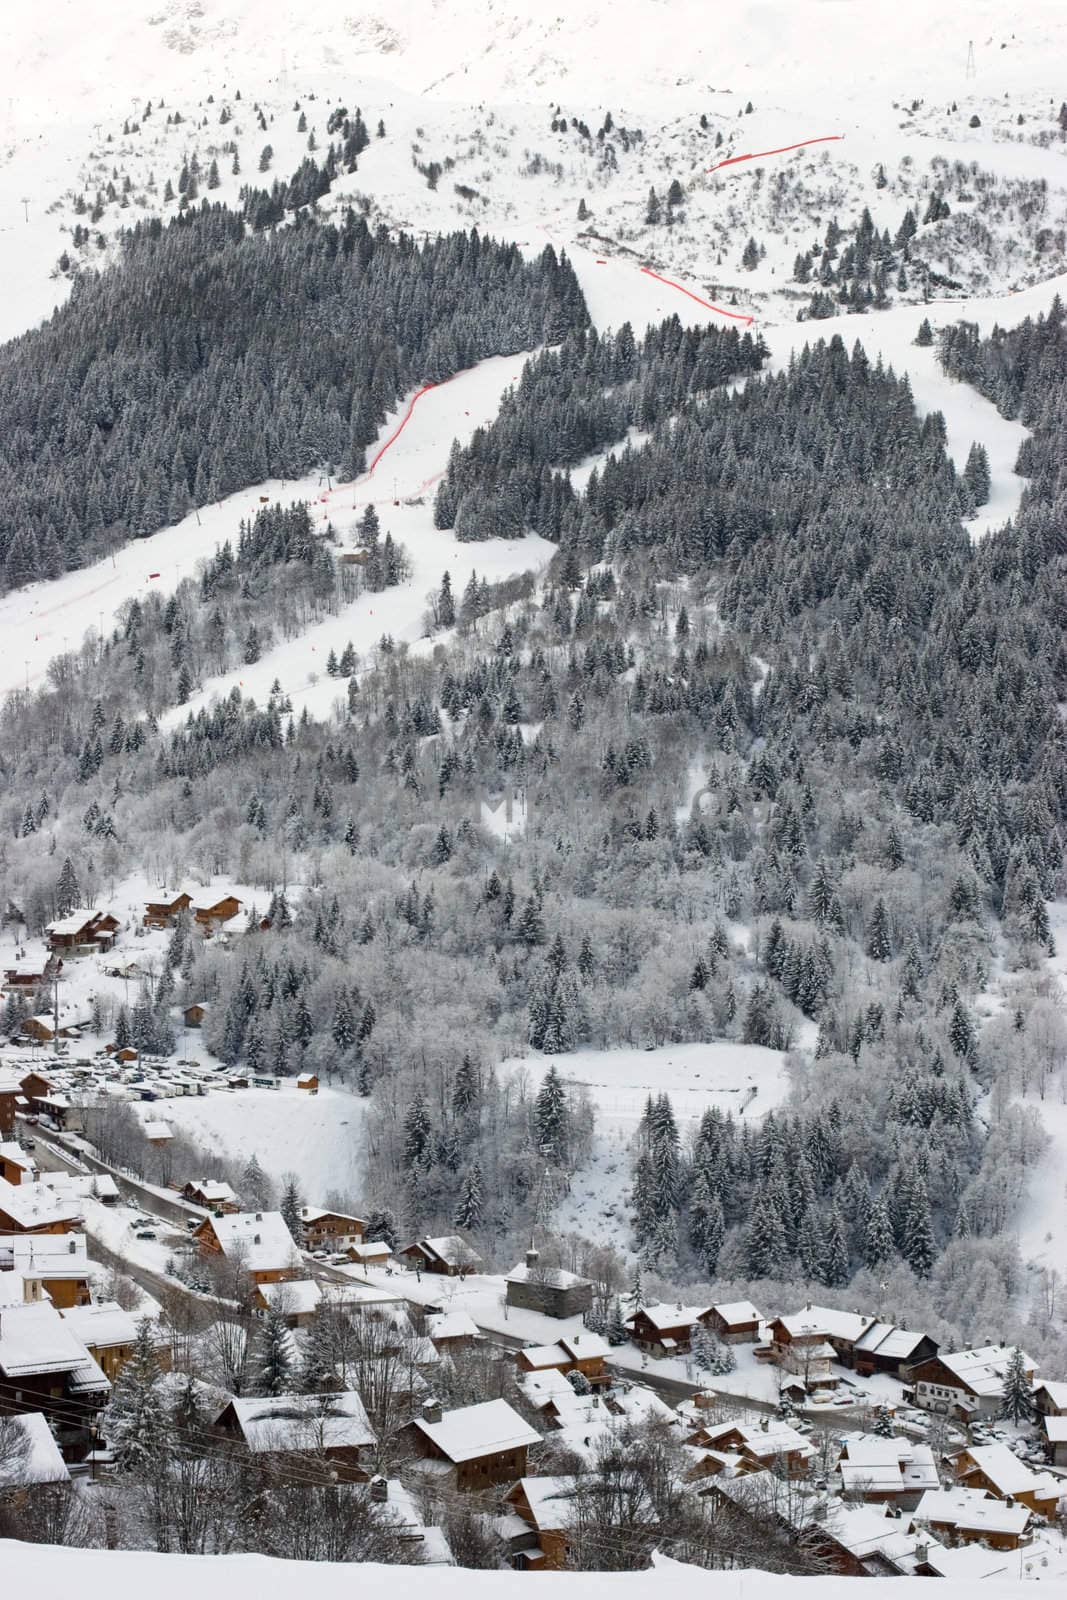 A view of the Meribel ski resort after snow storm